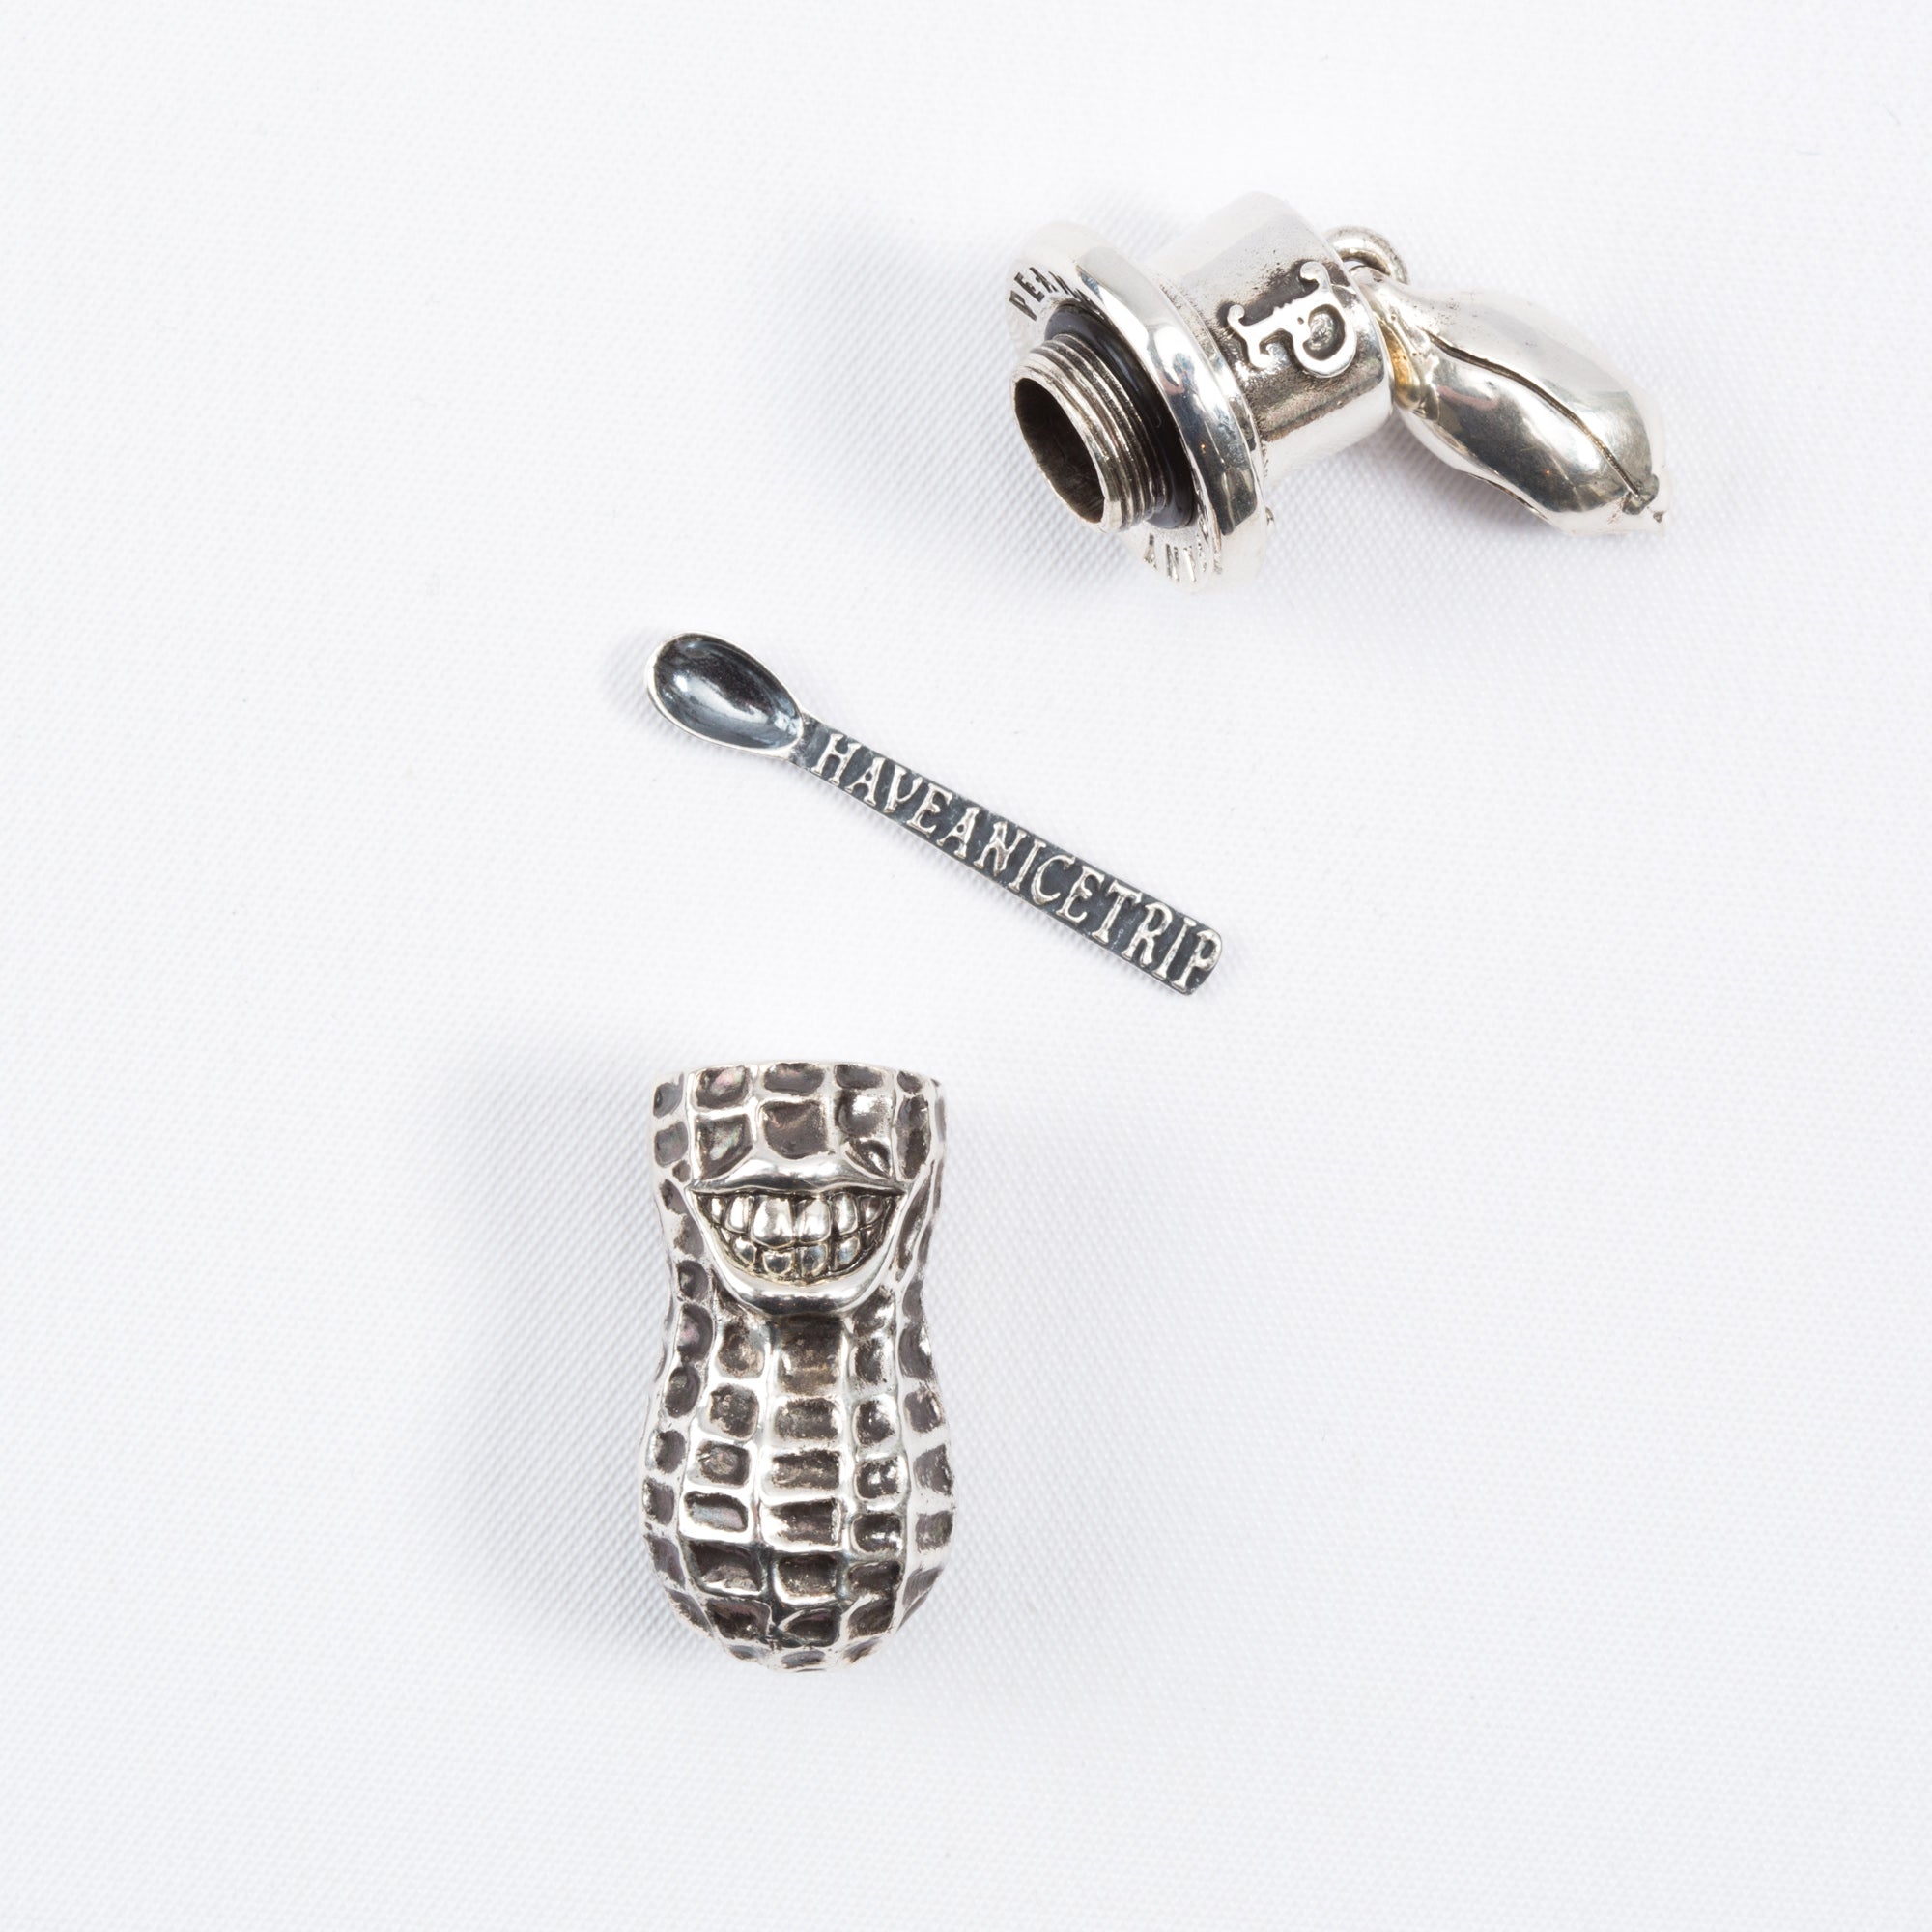 Yachimata Peanuts Pendant / Key Ring - Silver